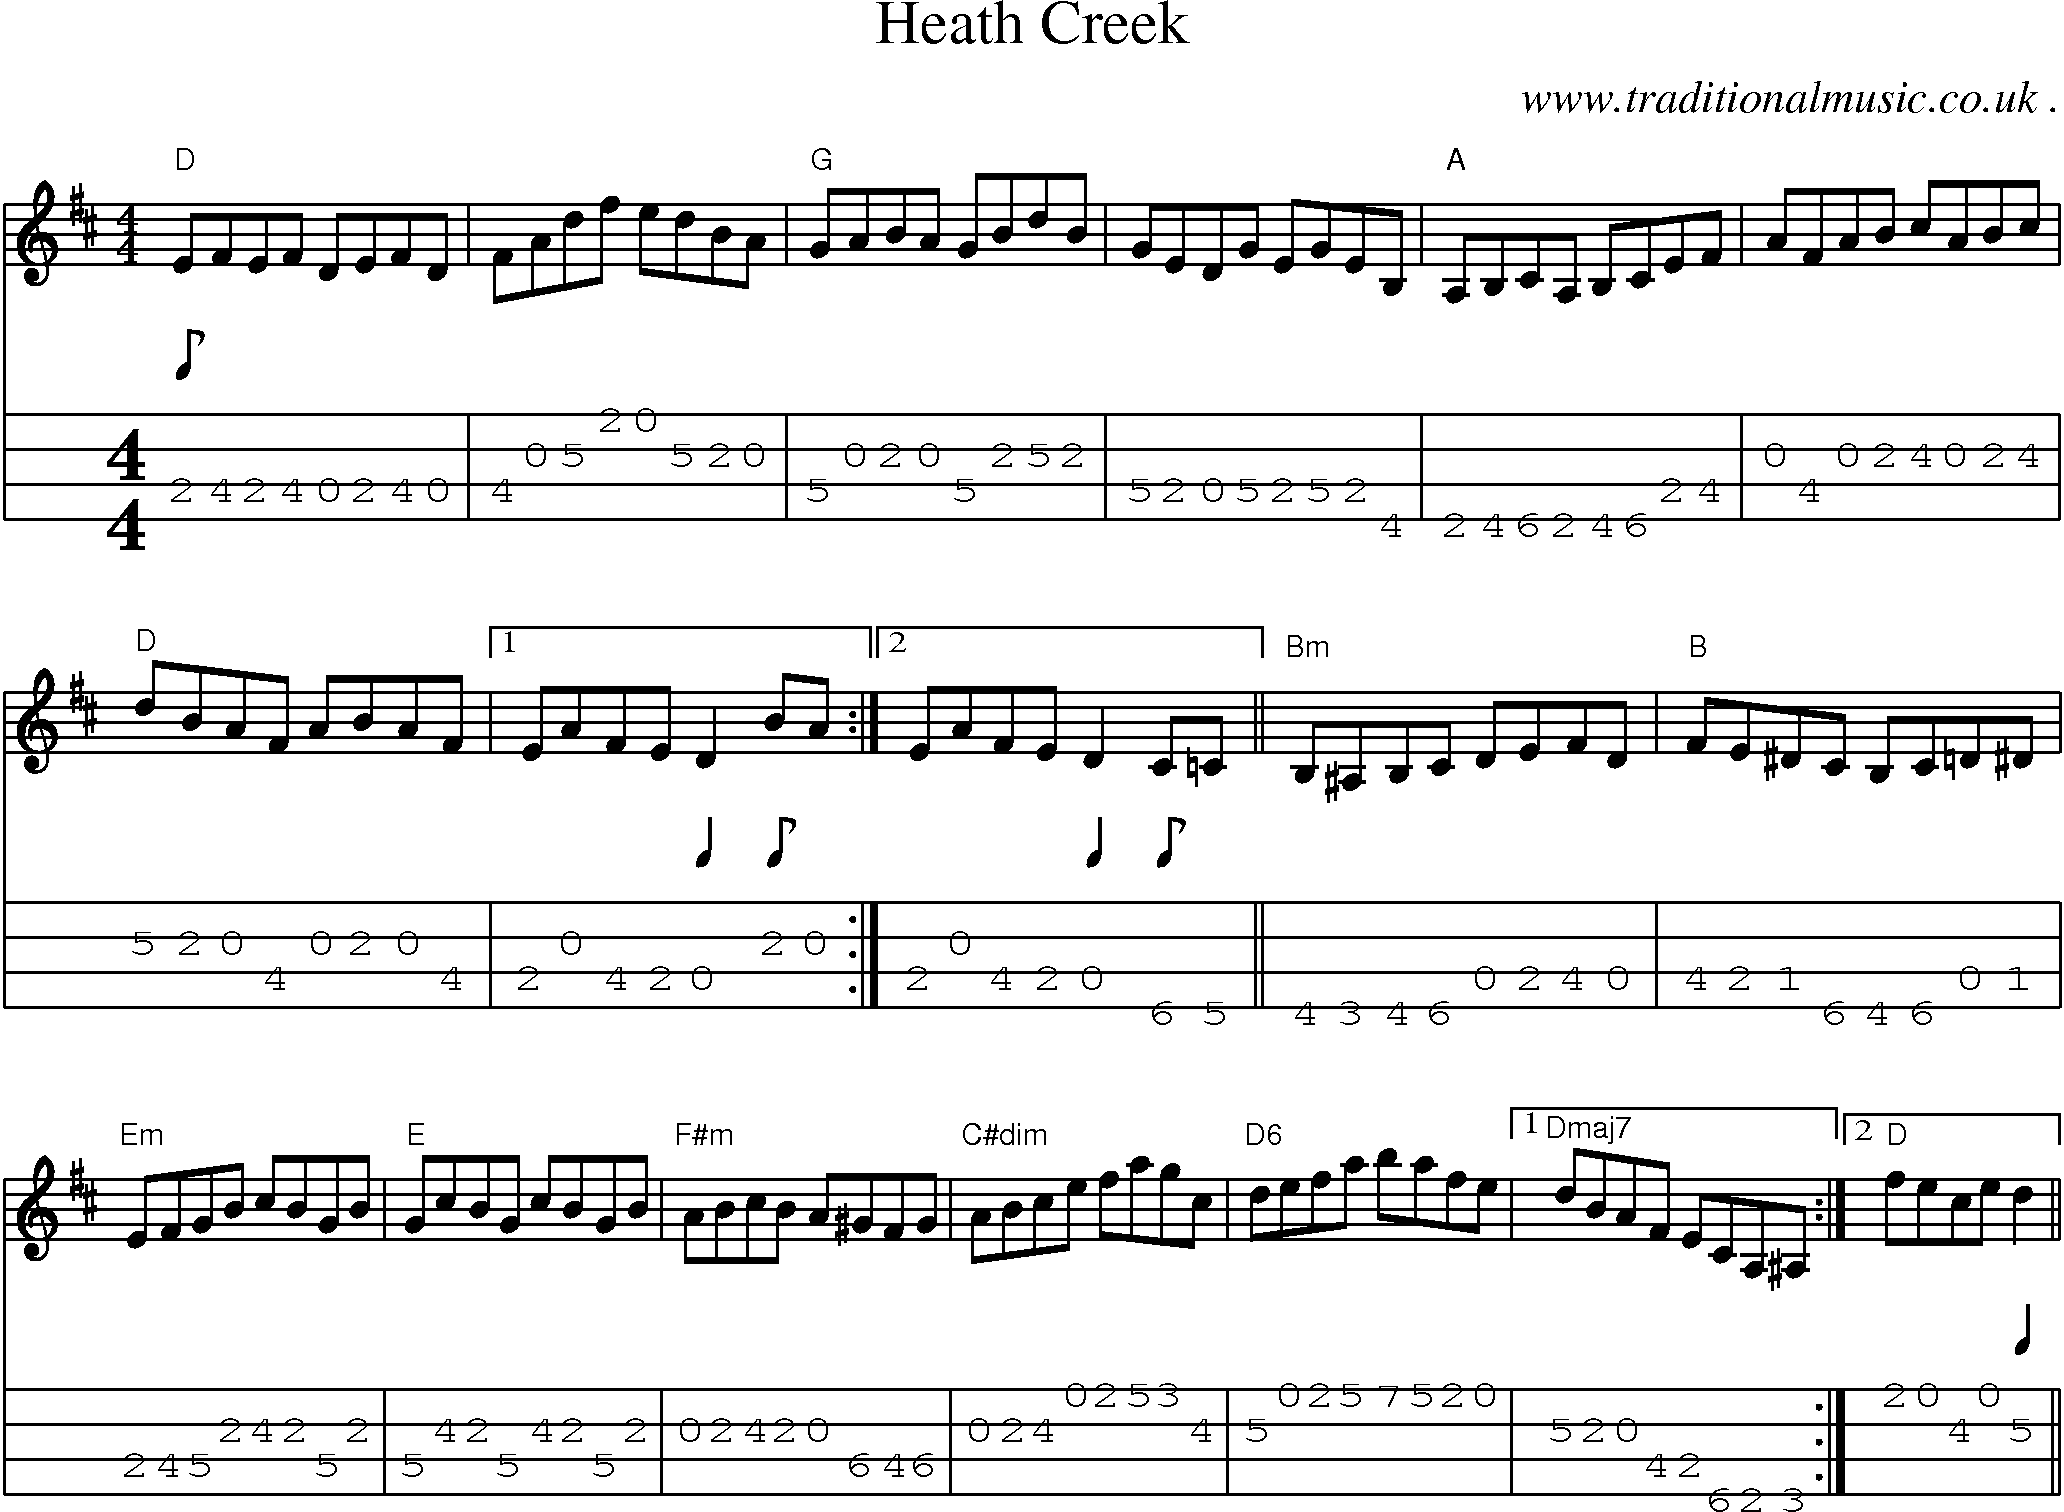 Music Score and Mandolin Tabs for Heath Creek